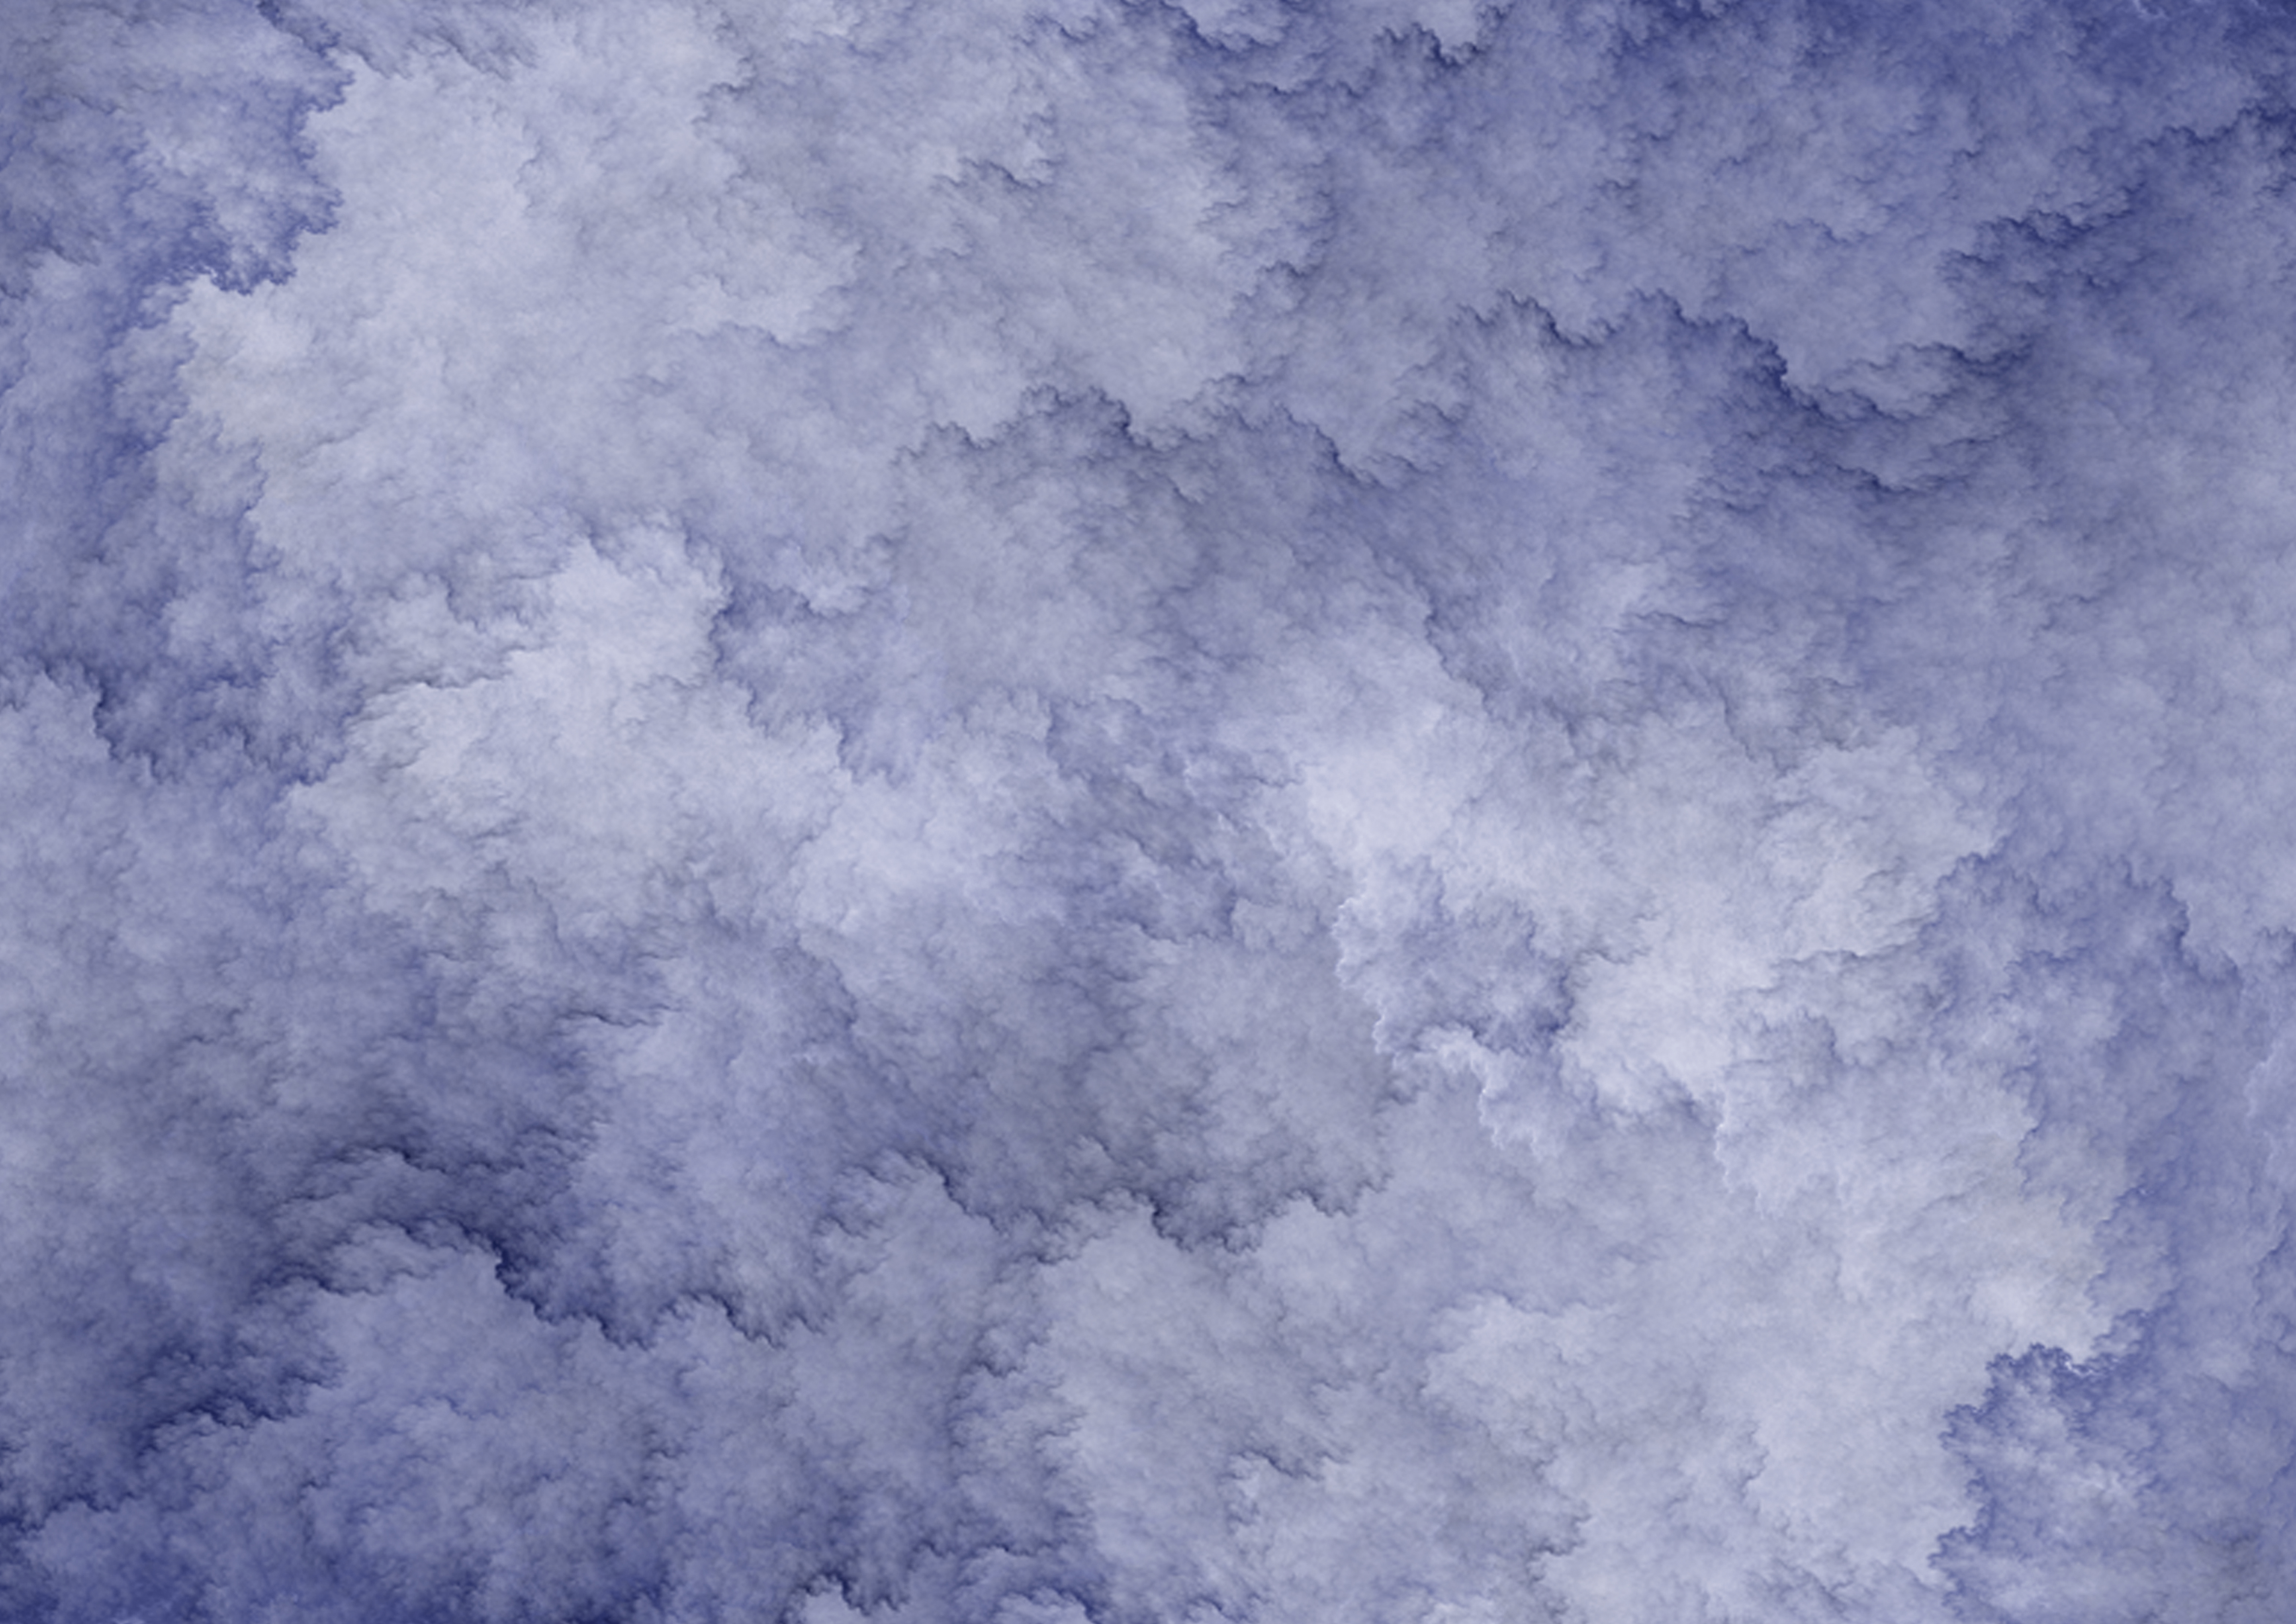 Cloudy Blue Unlit by PaulineMoss on DeviantArt